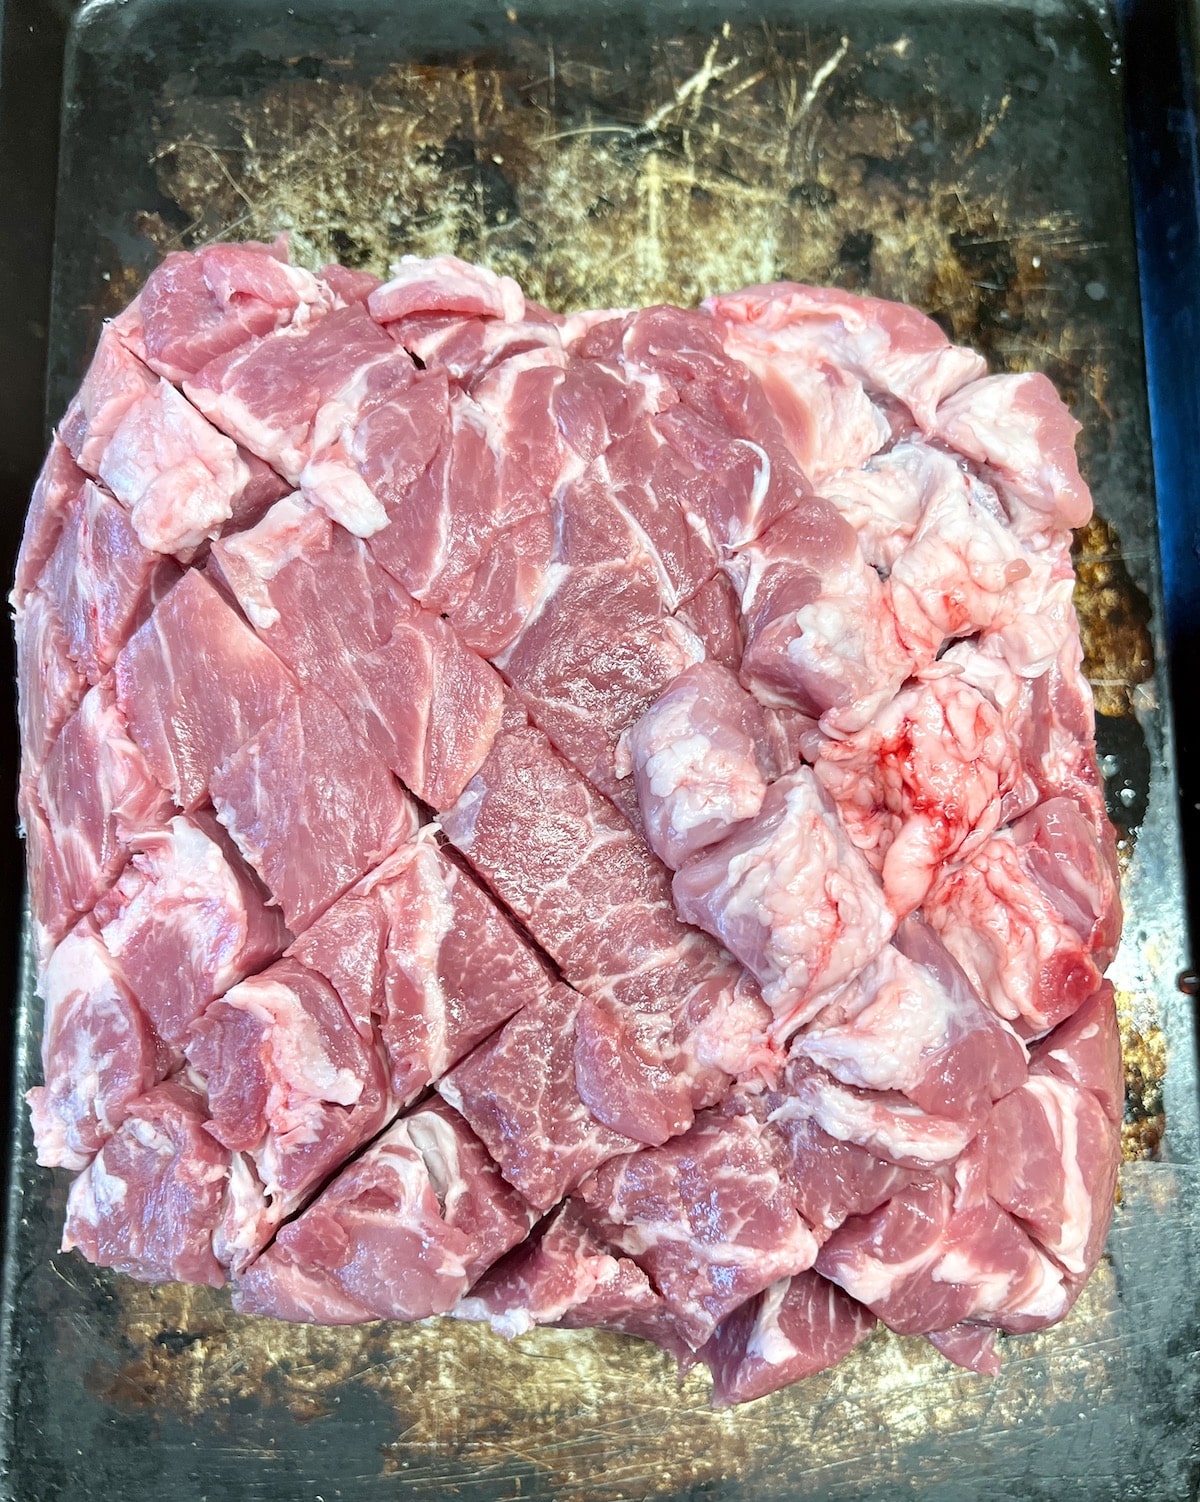 Pork butt, sliced in a crosshatch pattern for grilling.